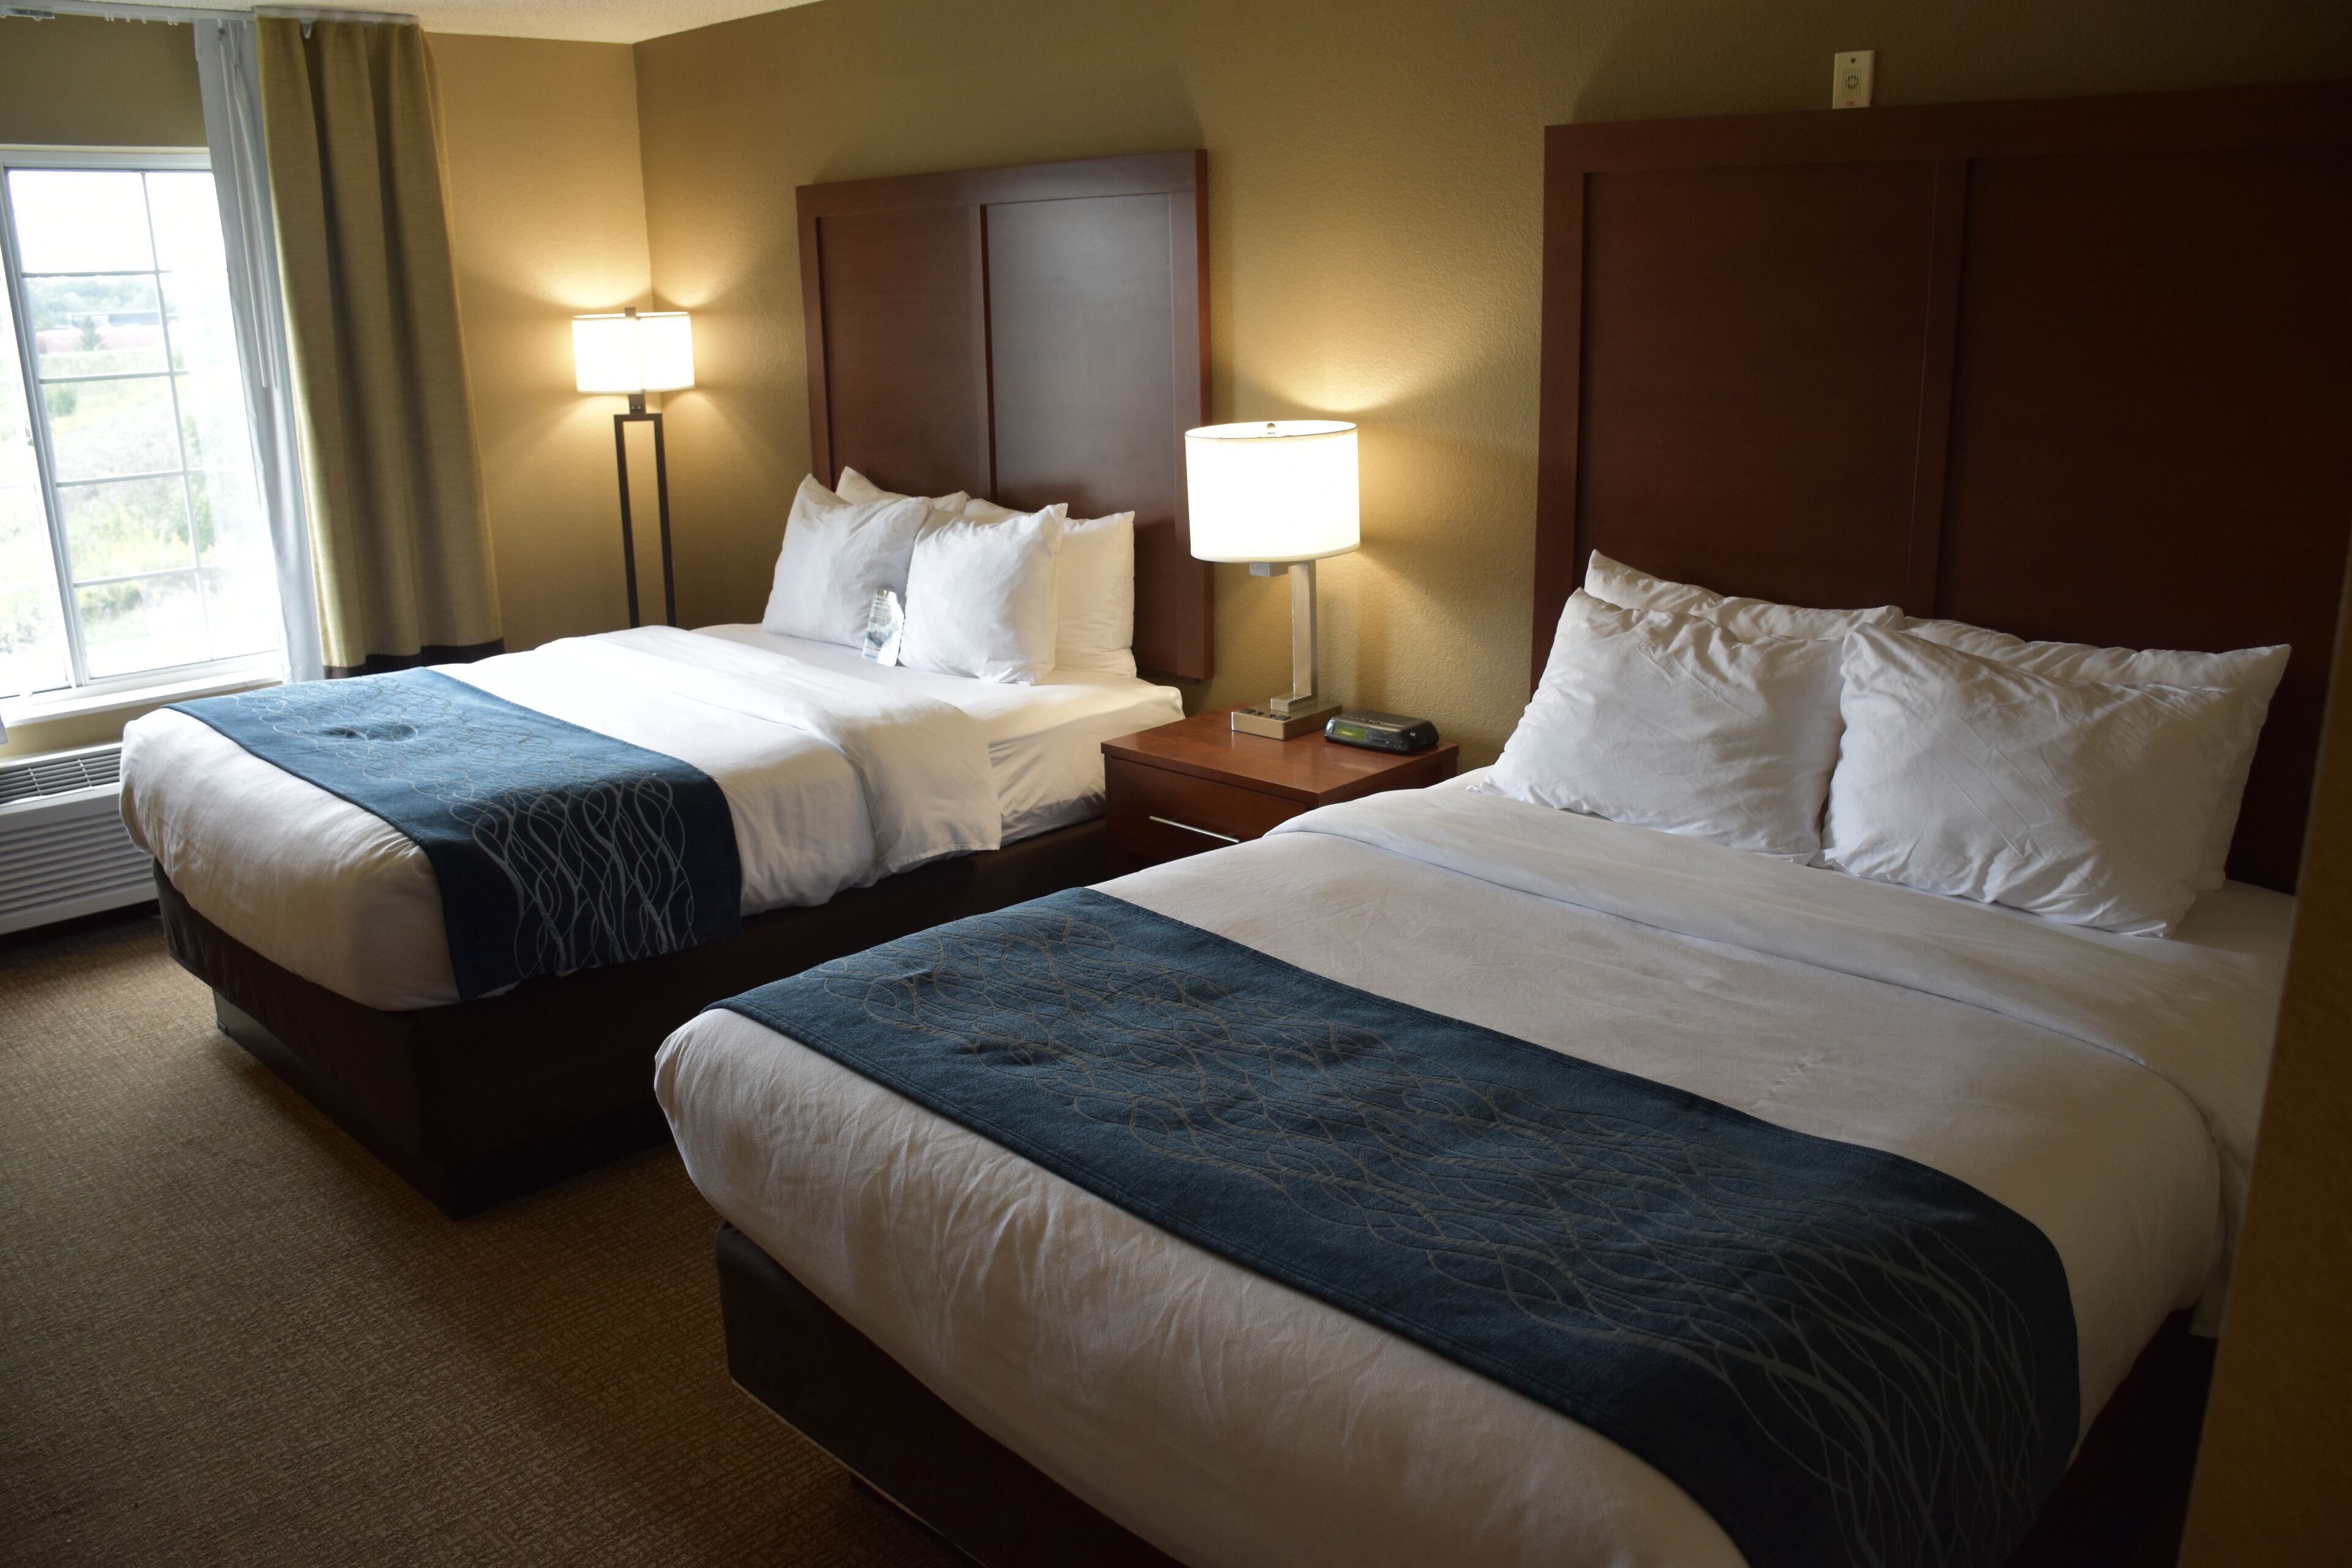 Country Inn & Suites by Radisson, Stillwater, MN